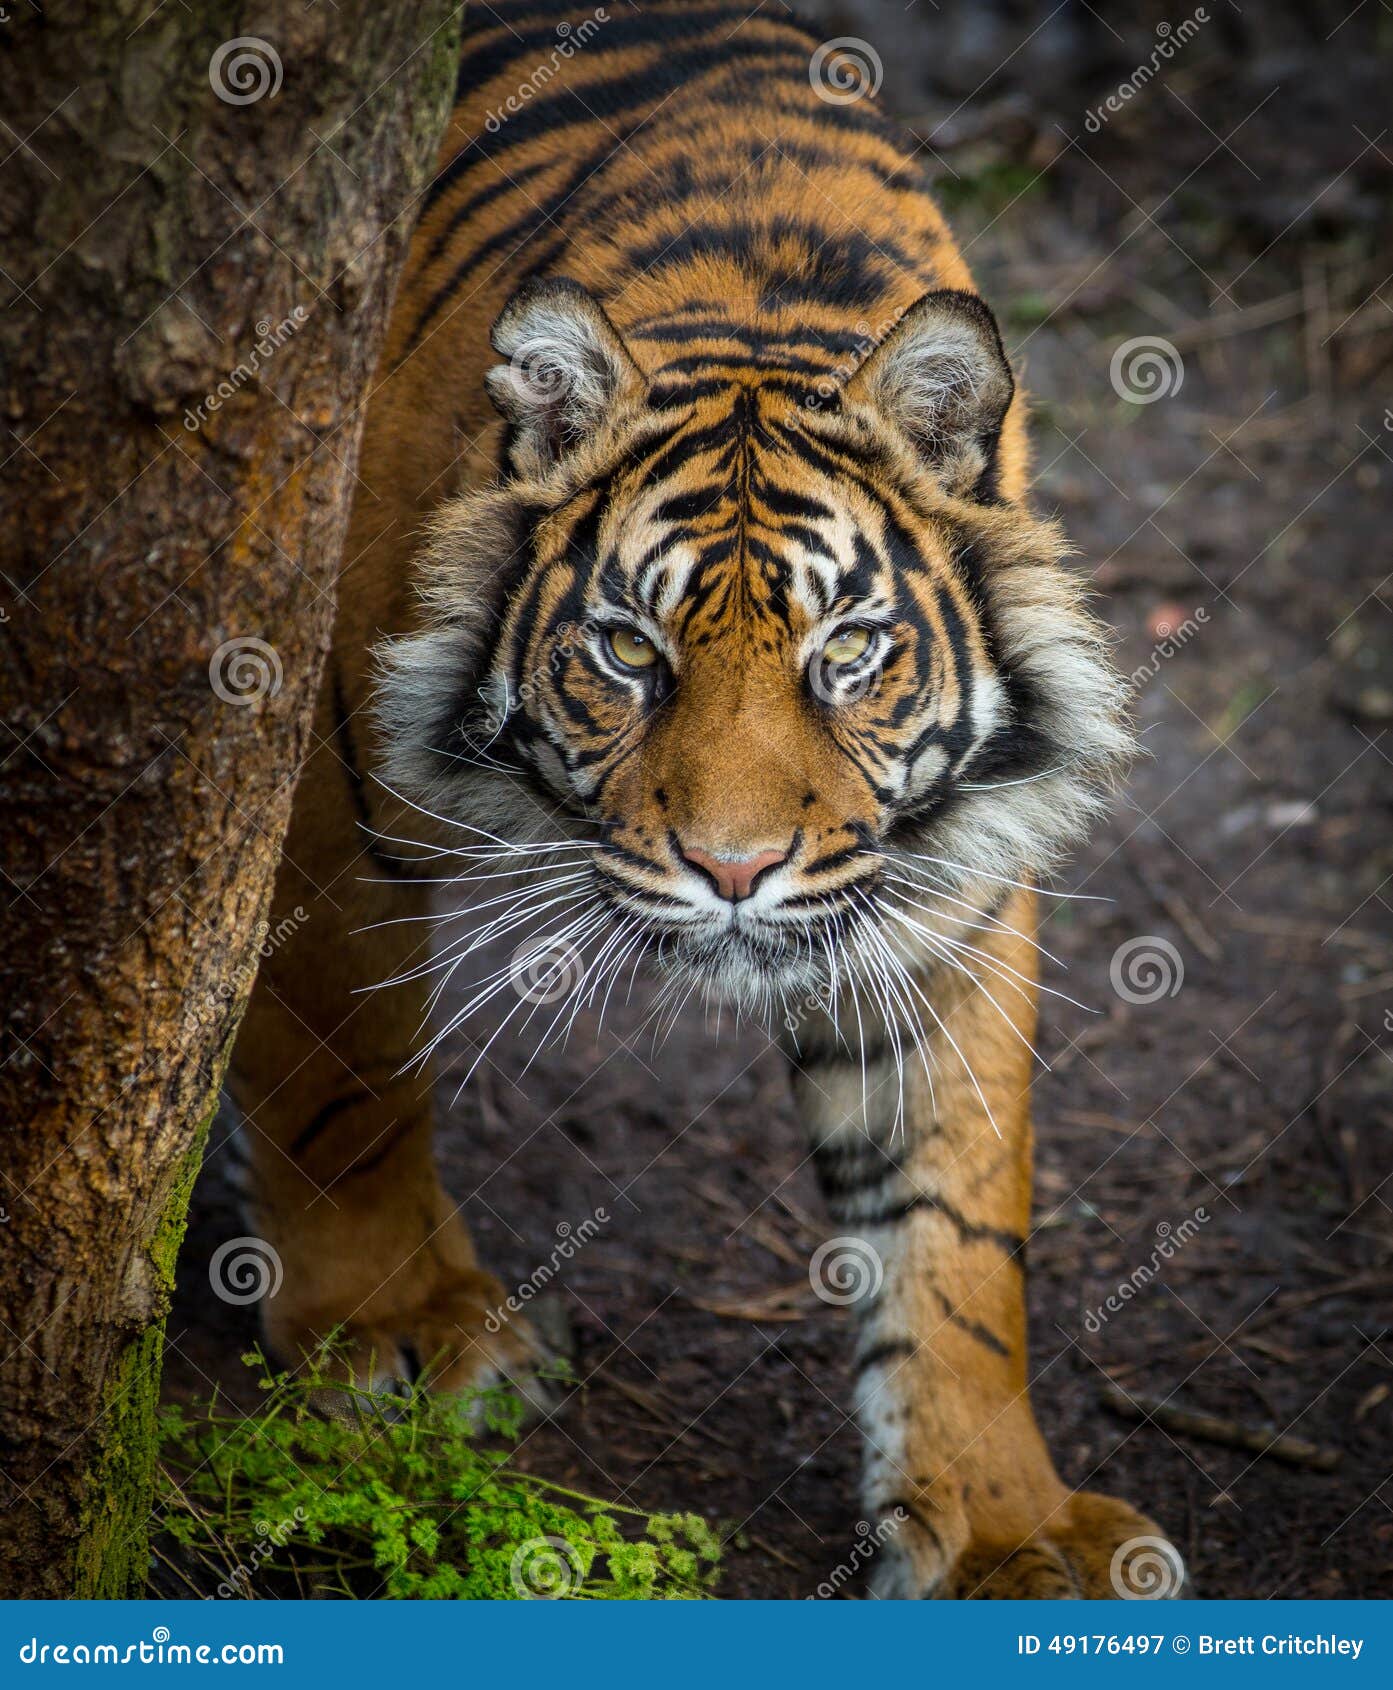 tiger stalking prey